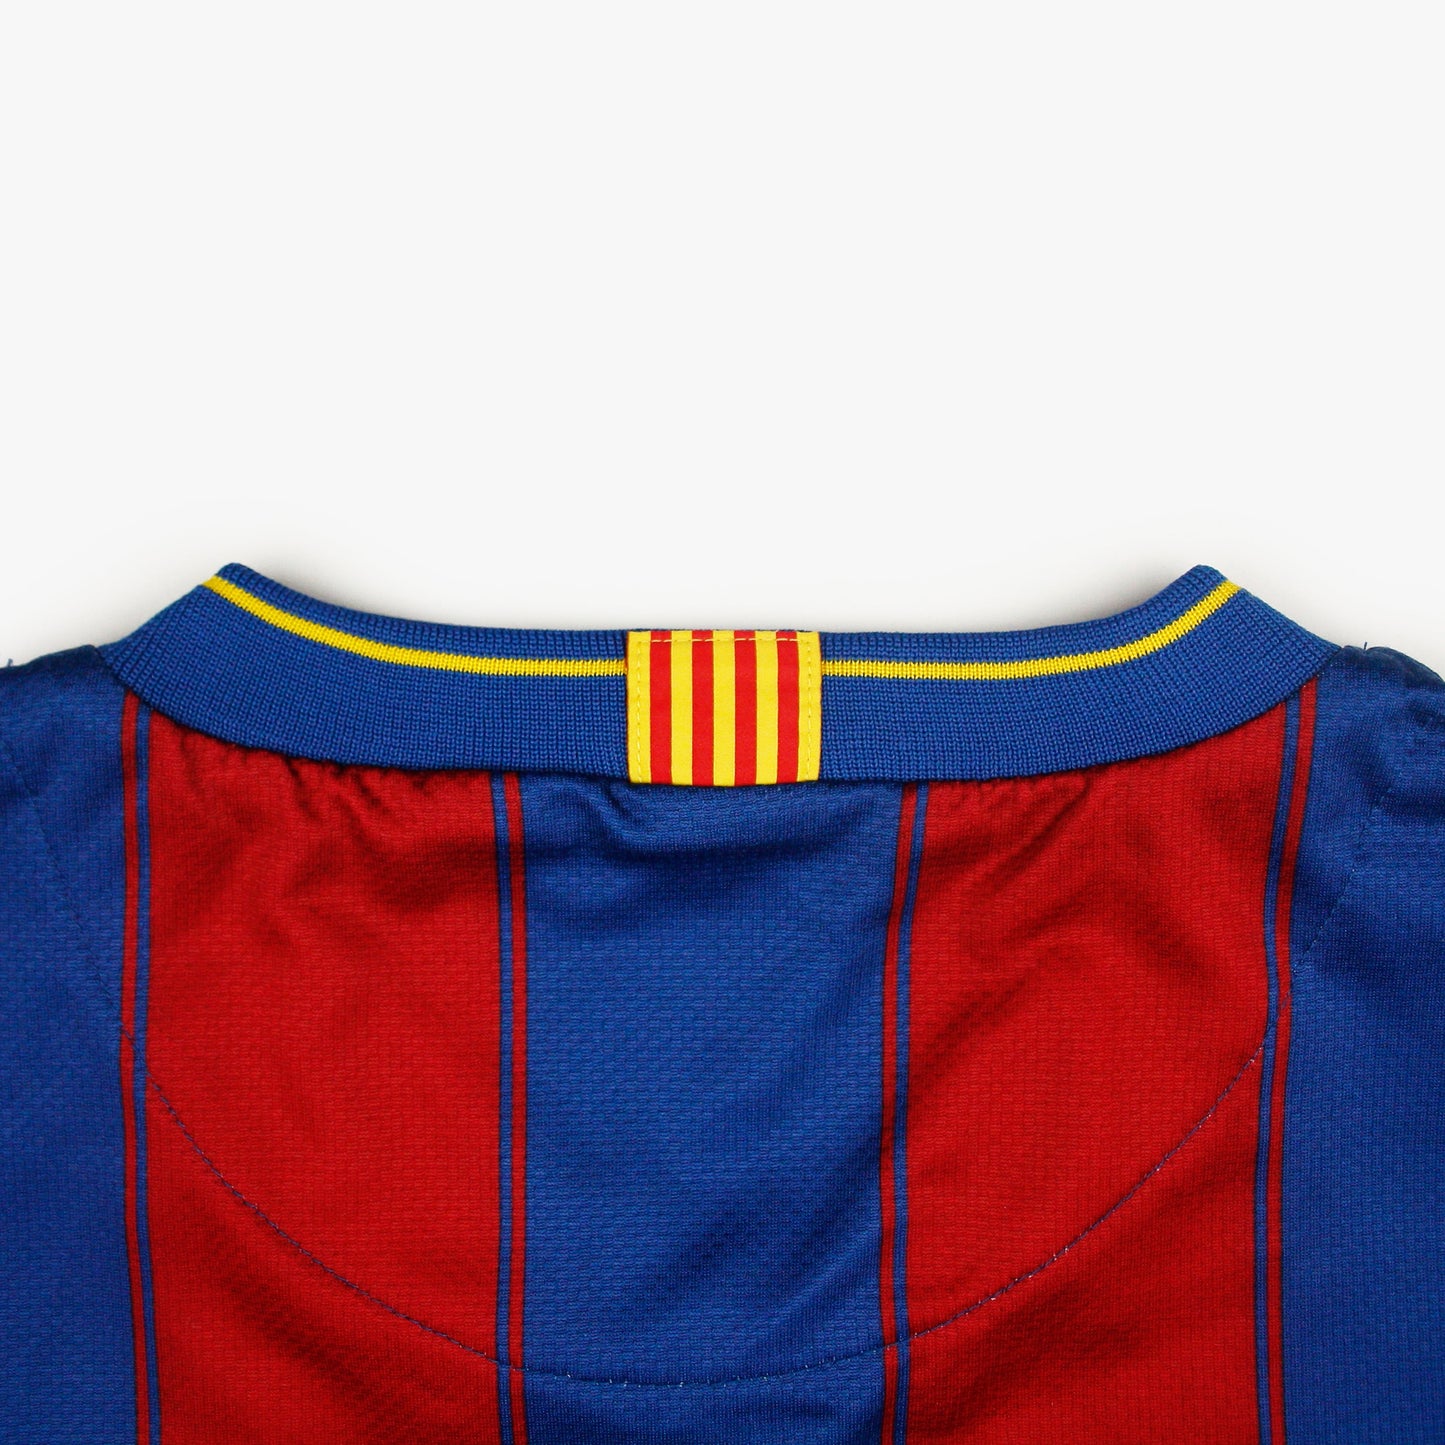 Barcelona 09/10 • Camiseta Local • L • Ibrahimović #9